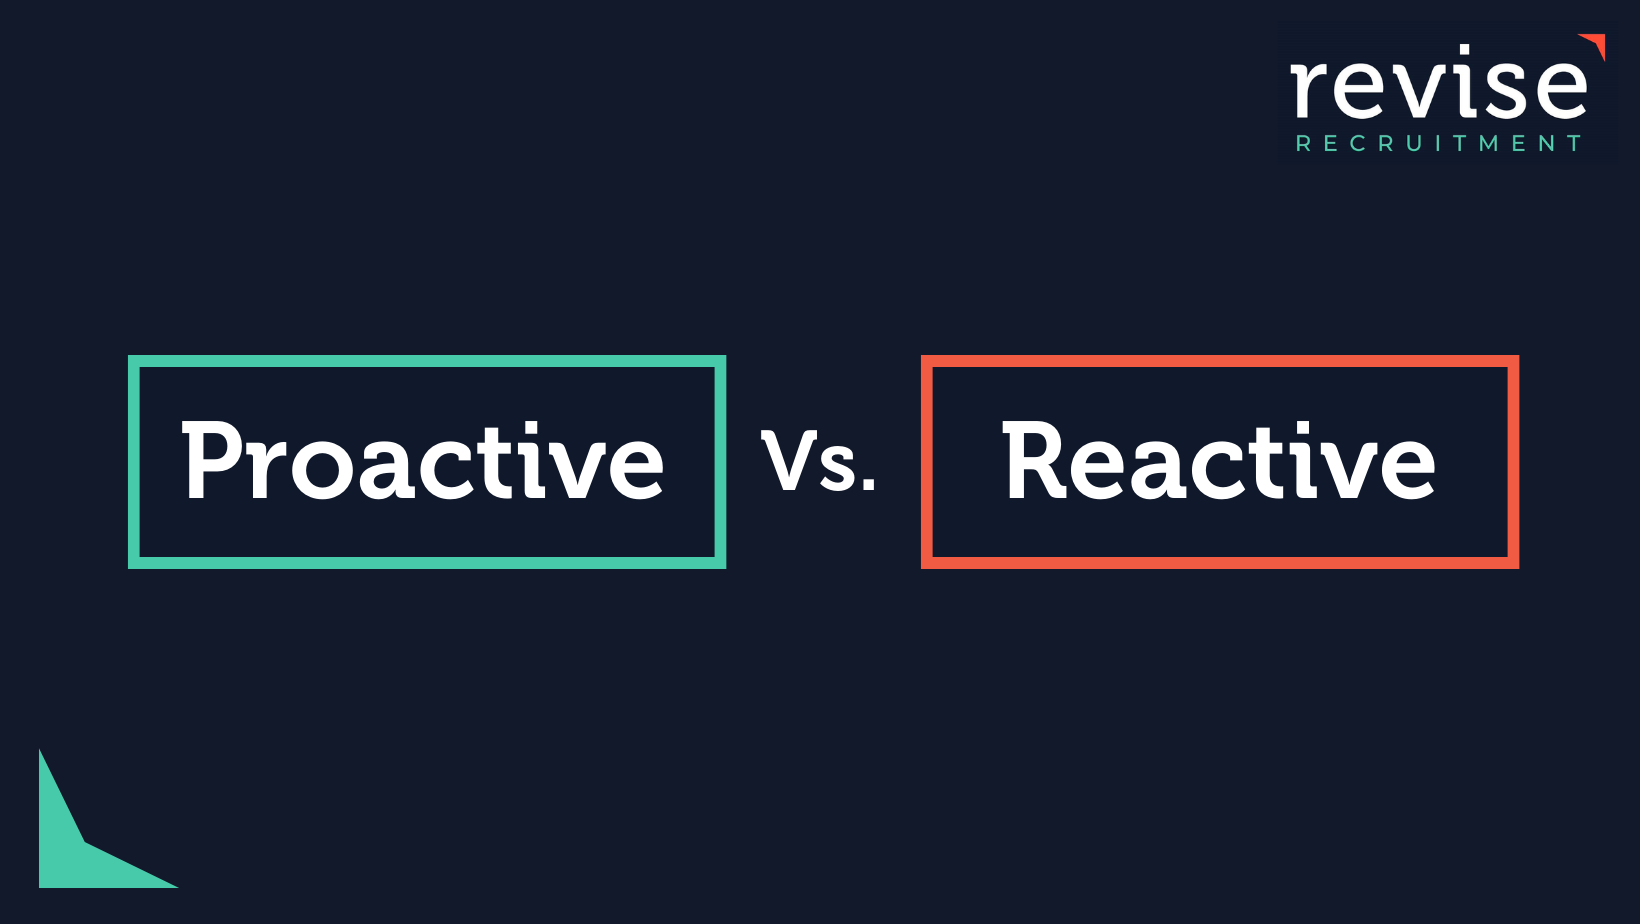 Proactive vs. reactive recruitment